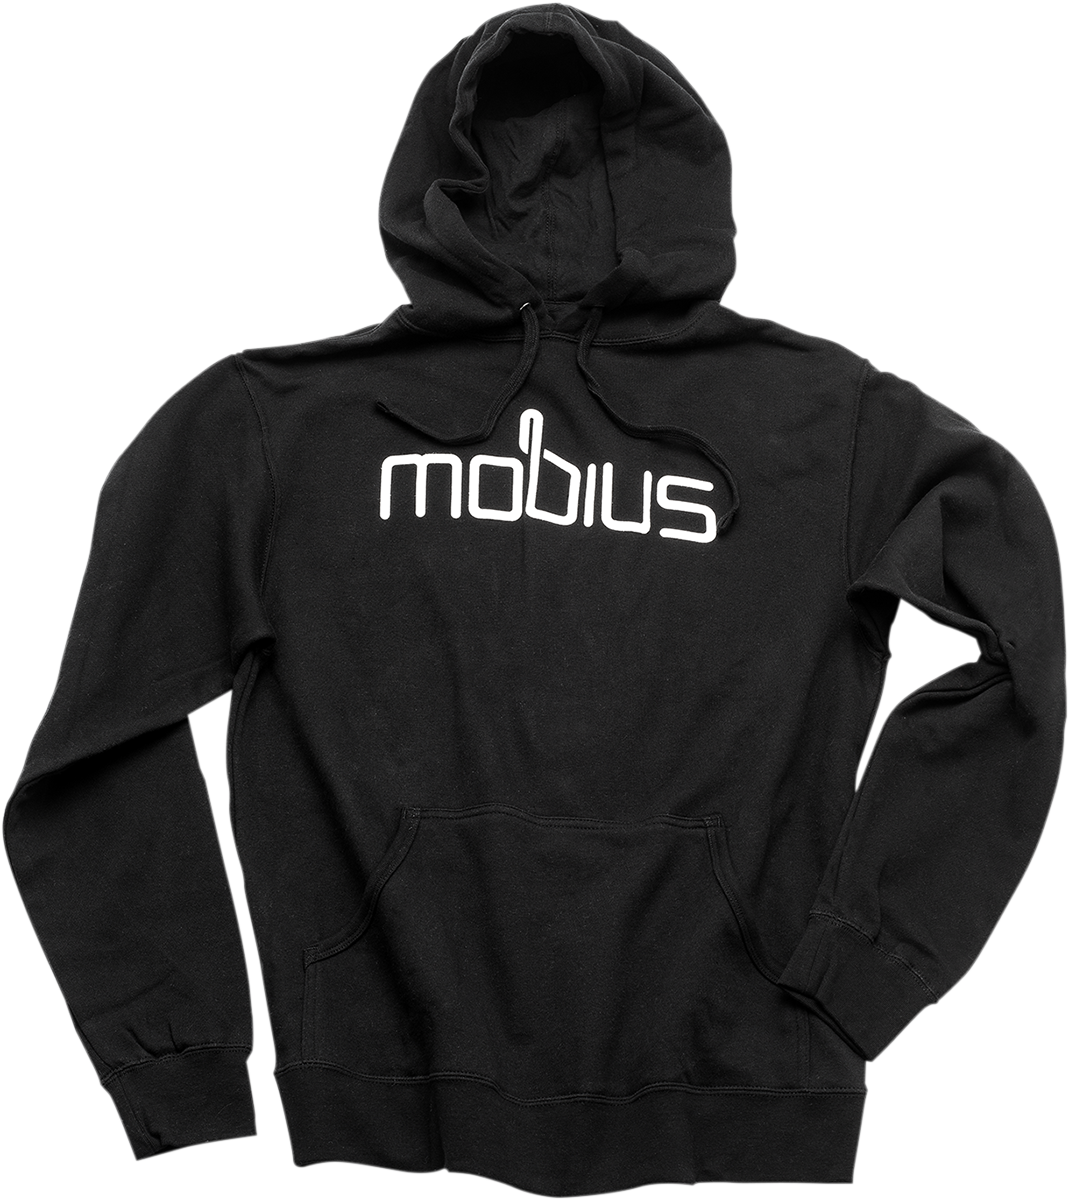 MOBIUS - HOODY MOBIUS BK MD - 812854020178